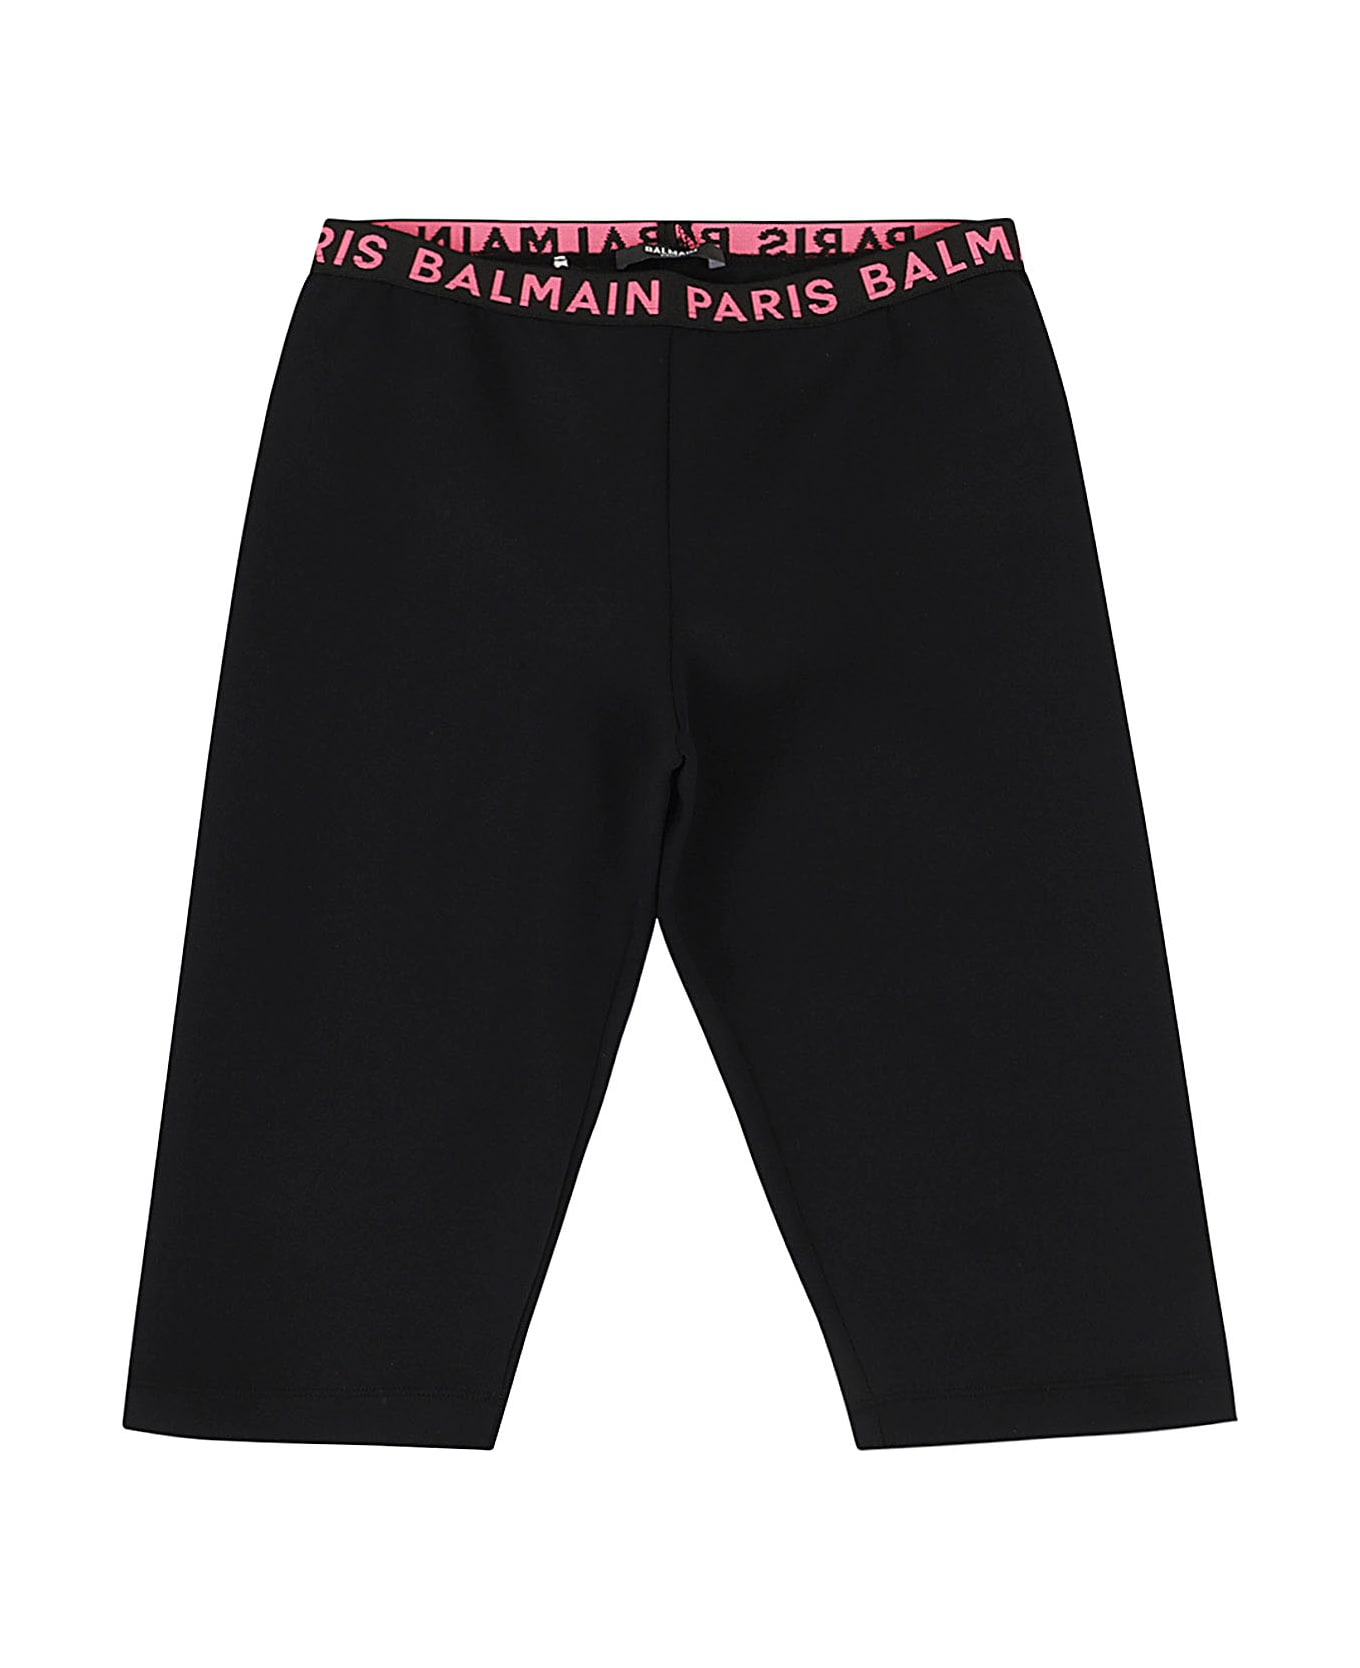 Balmain Sport Shorts - Fu Black Fuchsia